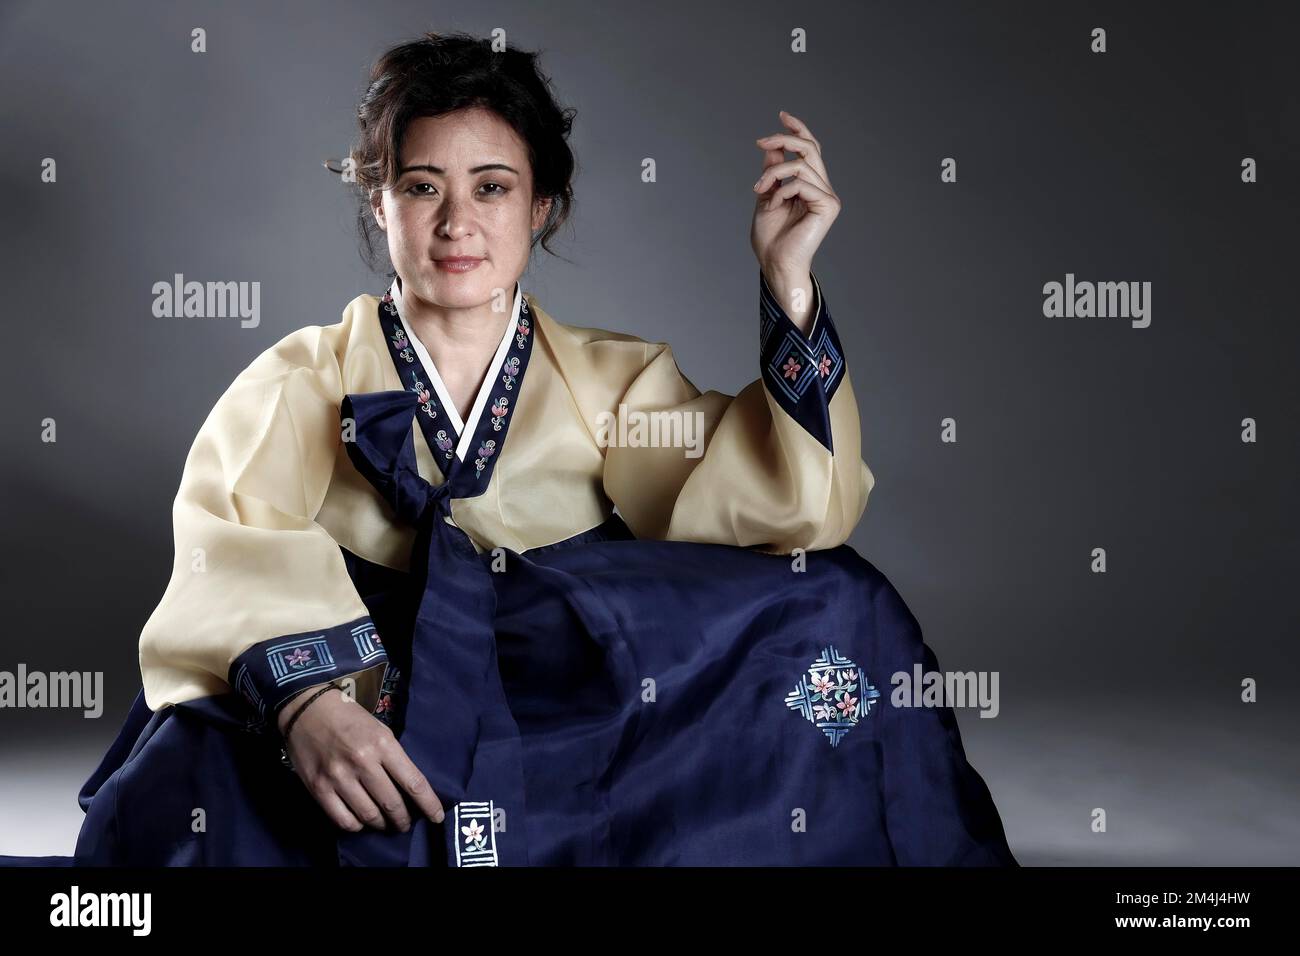 Woman in Korean traditional costume, Korean woman in hanbok, Korea Stock Photo